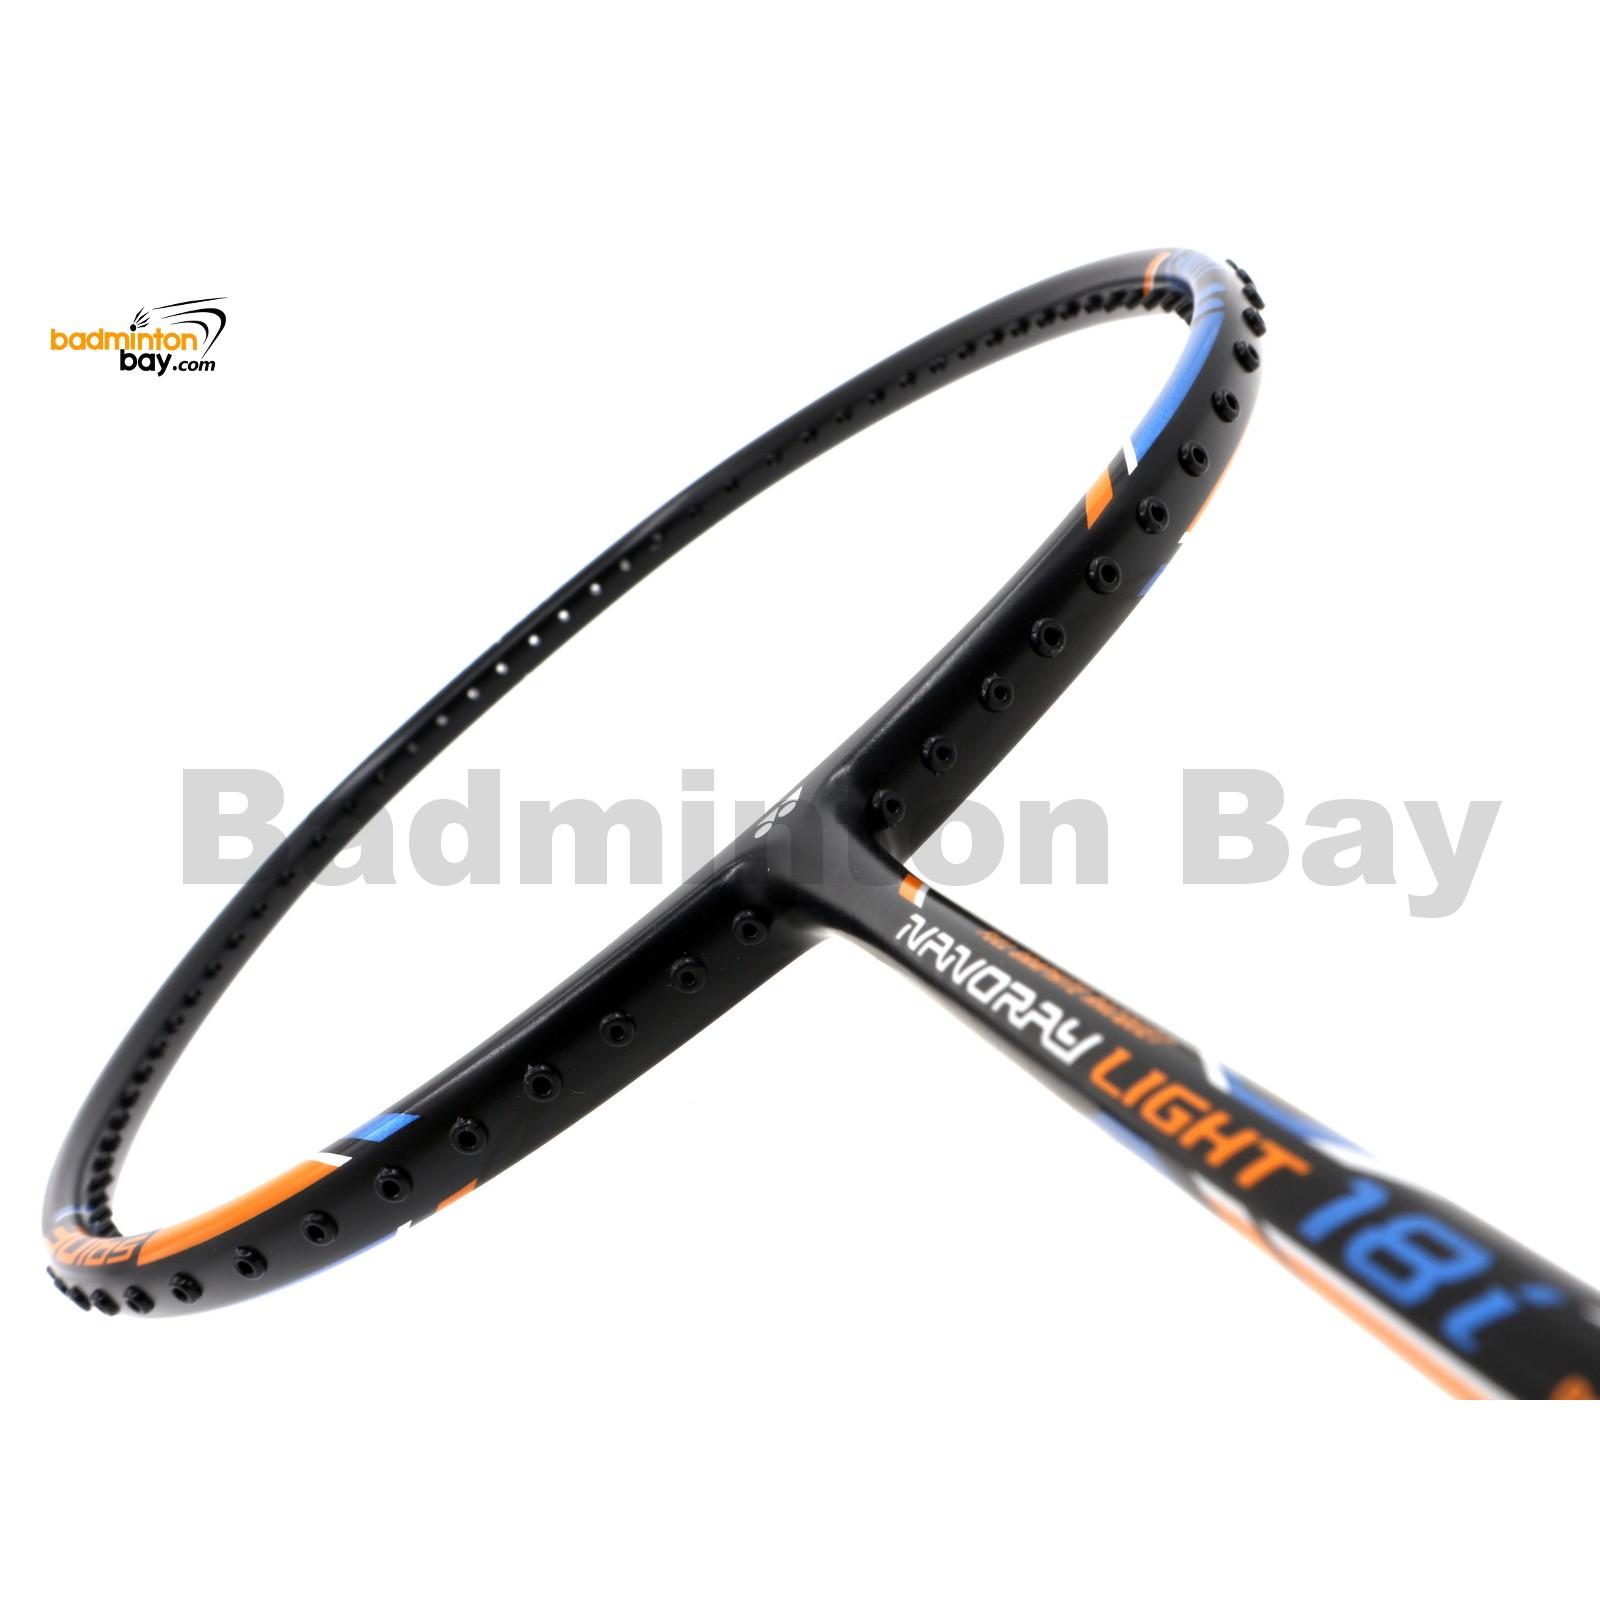 Yonex Nanoray Light 18i Graphite Badminton Racquet Black 77g, 30 lbs Tension 